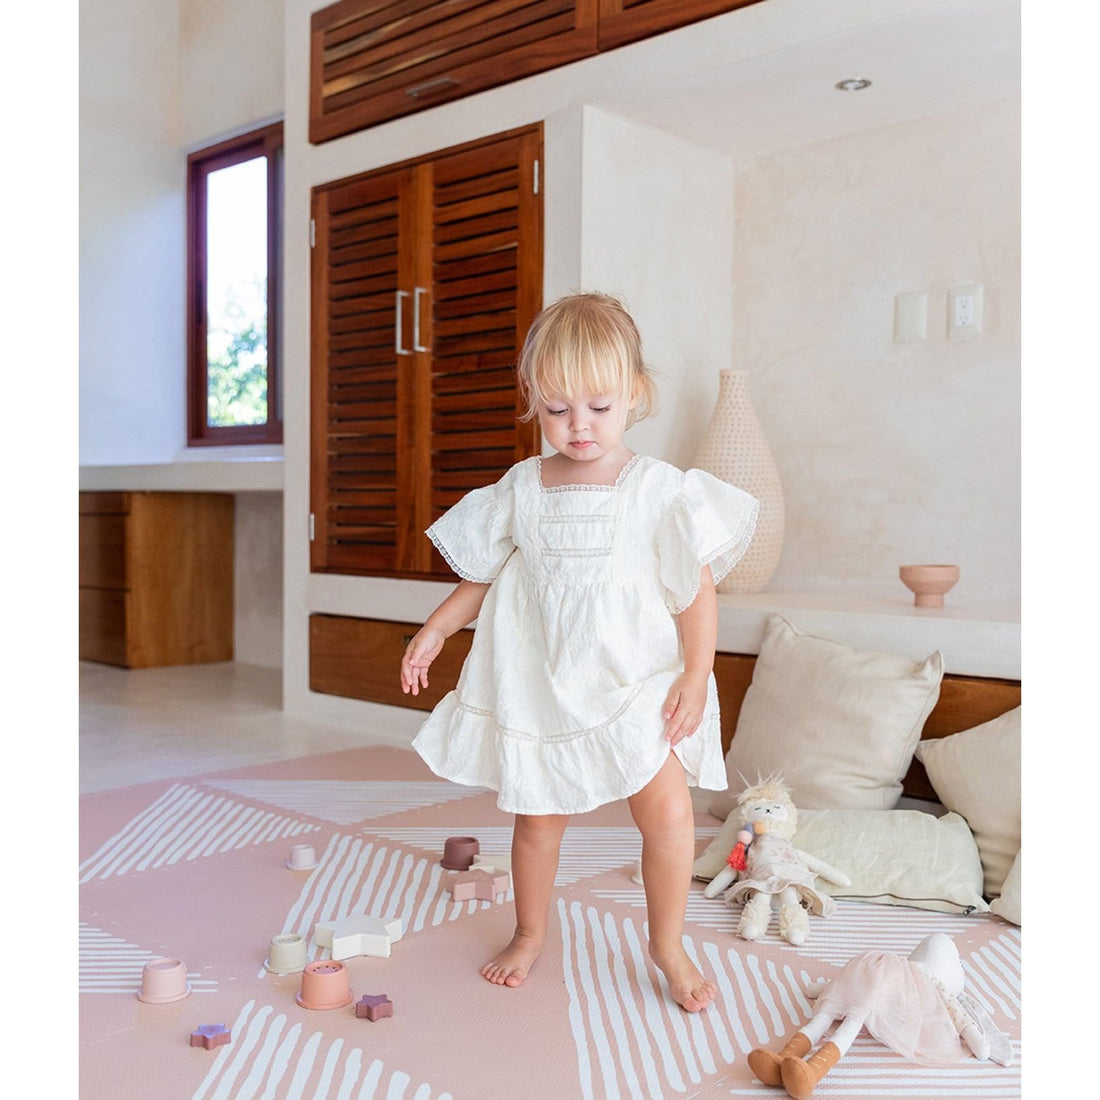 toddlekind-prettier-playmat-sandy-line-sea-shell-120x180cm-6-tiles-12-edging-borders-baby-nursery-home-decor-TODK-339072-00_5